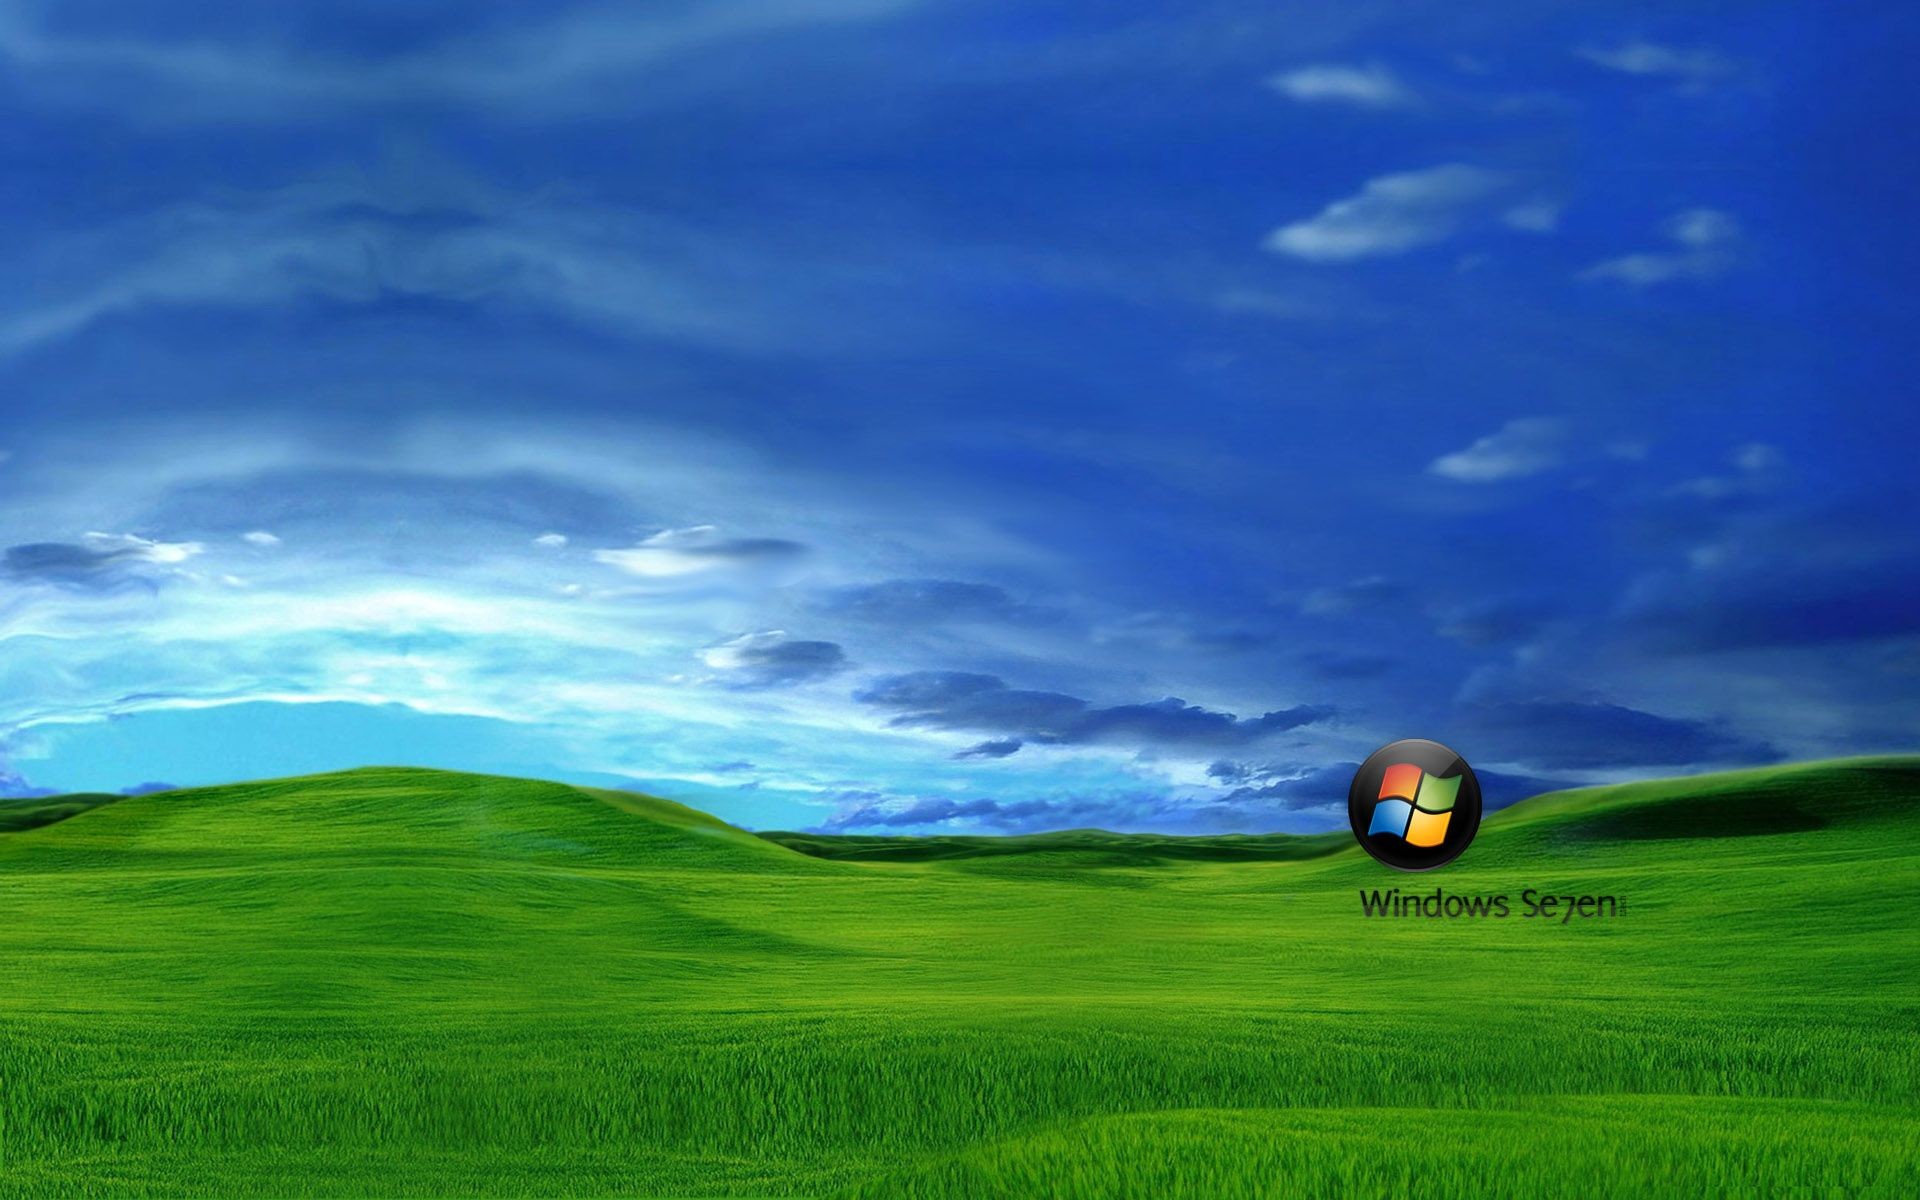 1920x1200 Windows XP Wallpaper Location Free wallpaper download 1920Ã1200